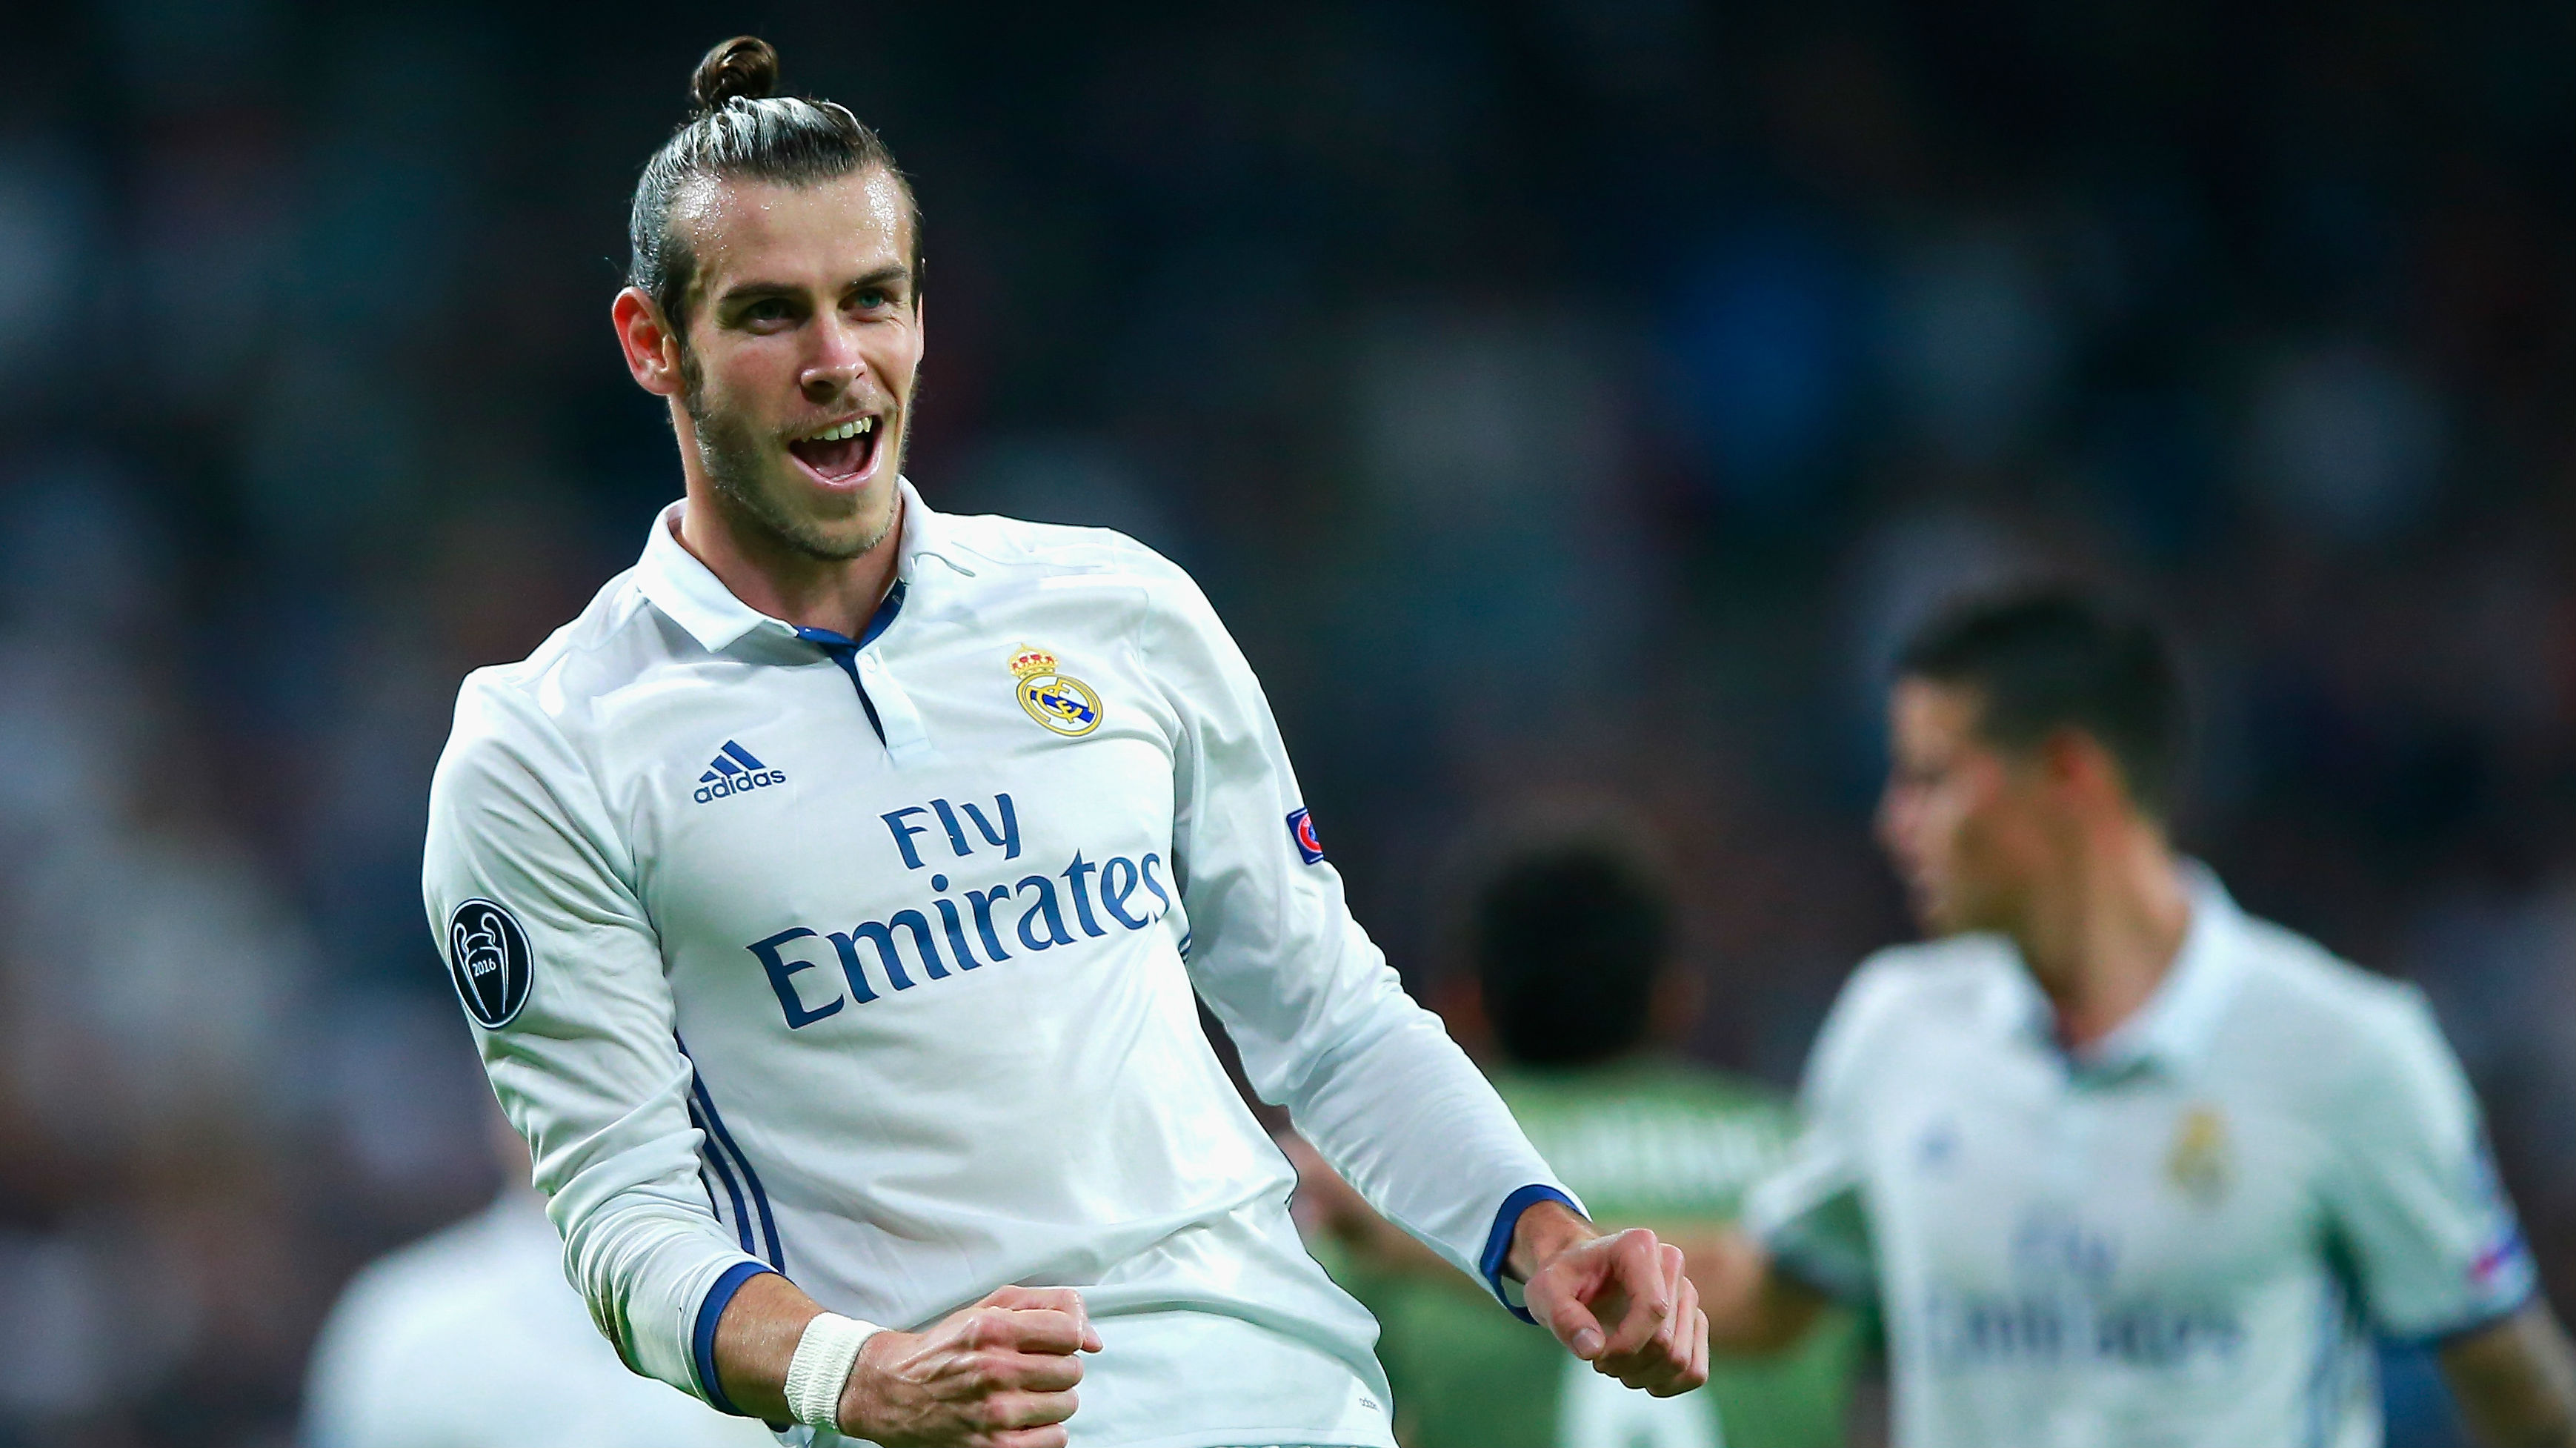 Senado Ambiente Retirada Gareth Bale signs £350k-a-week deal to stay at Real Madrid | The Week UK